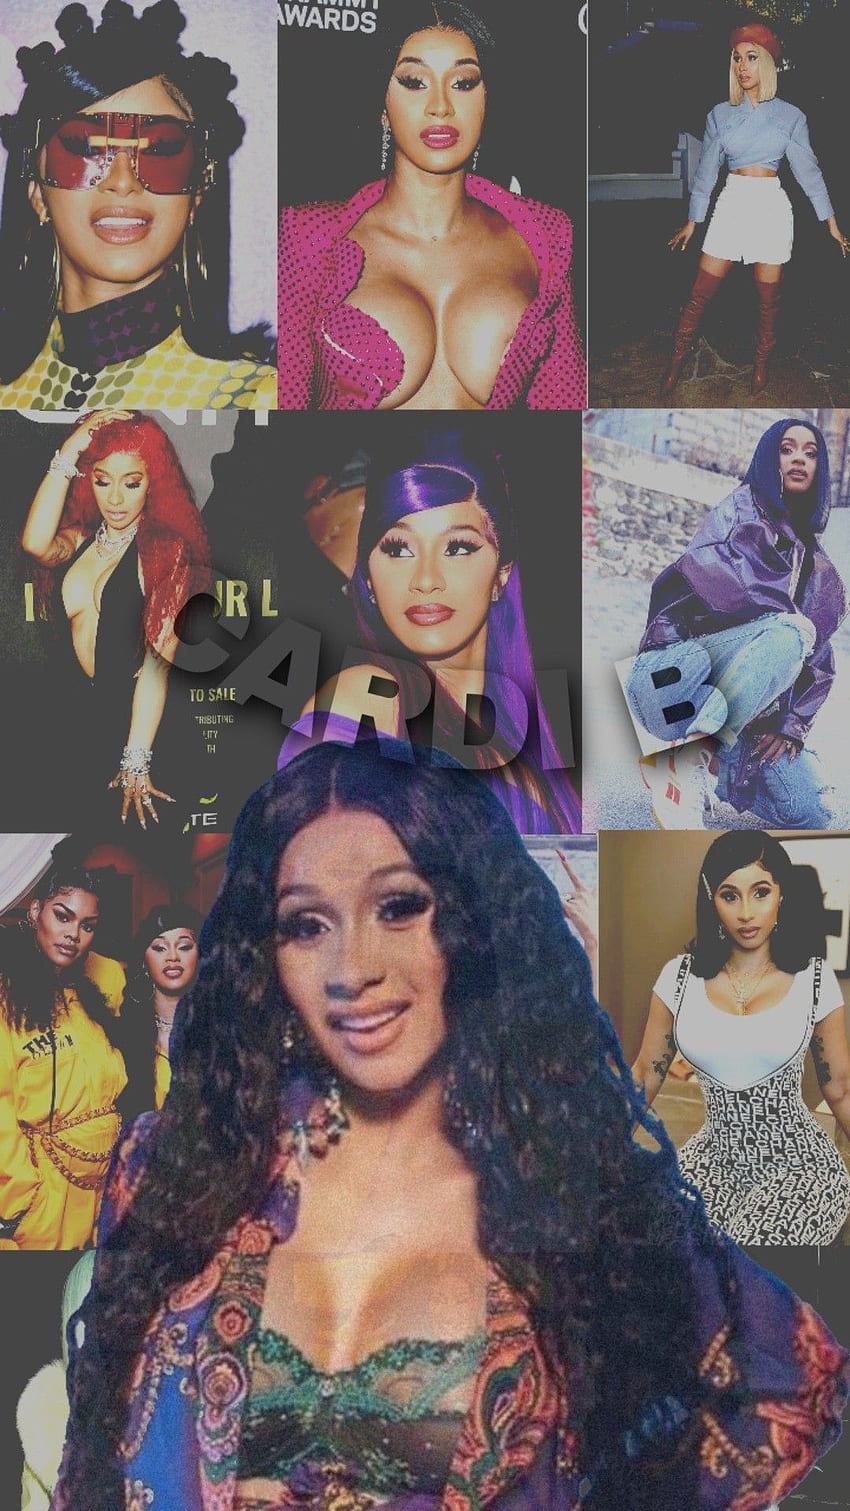  Cardi B And Nicki Minaj HD Wallpapers Photos Pictures WhatsApp Status DP  Full Free Download